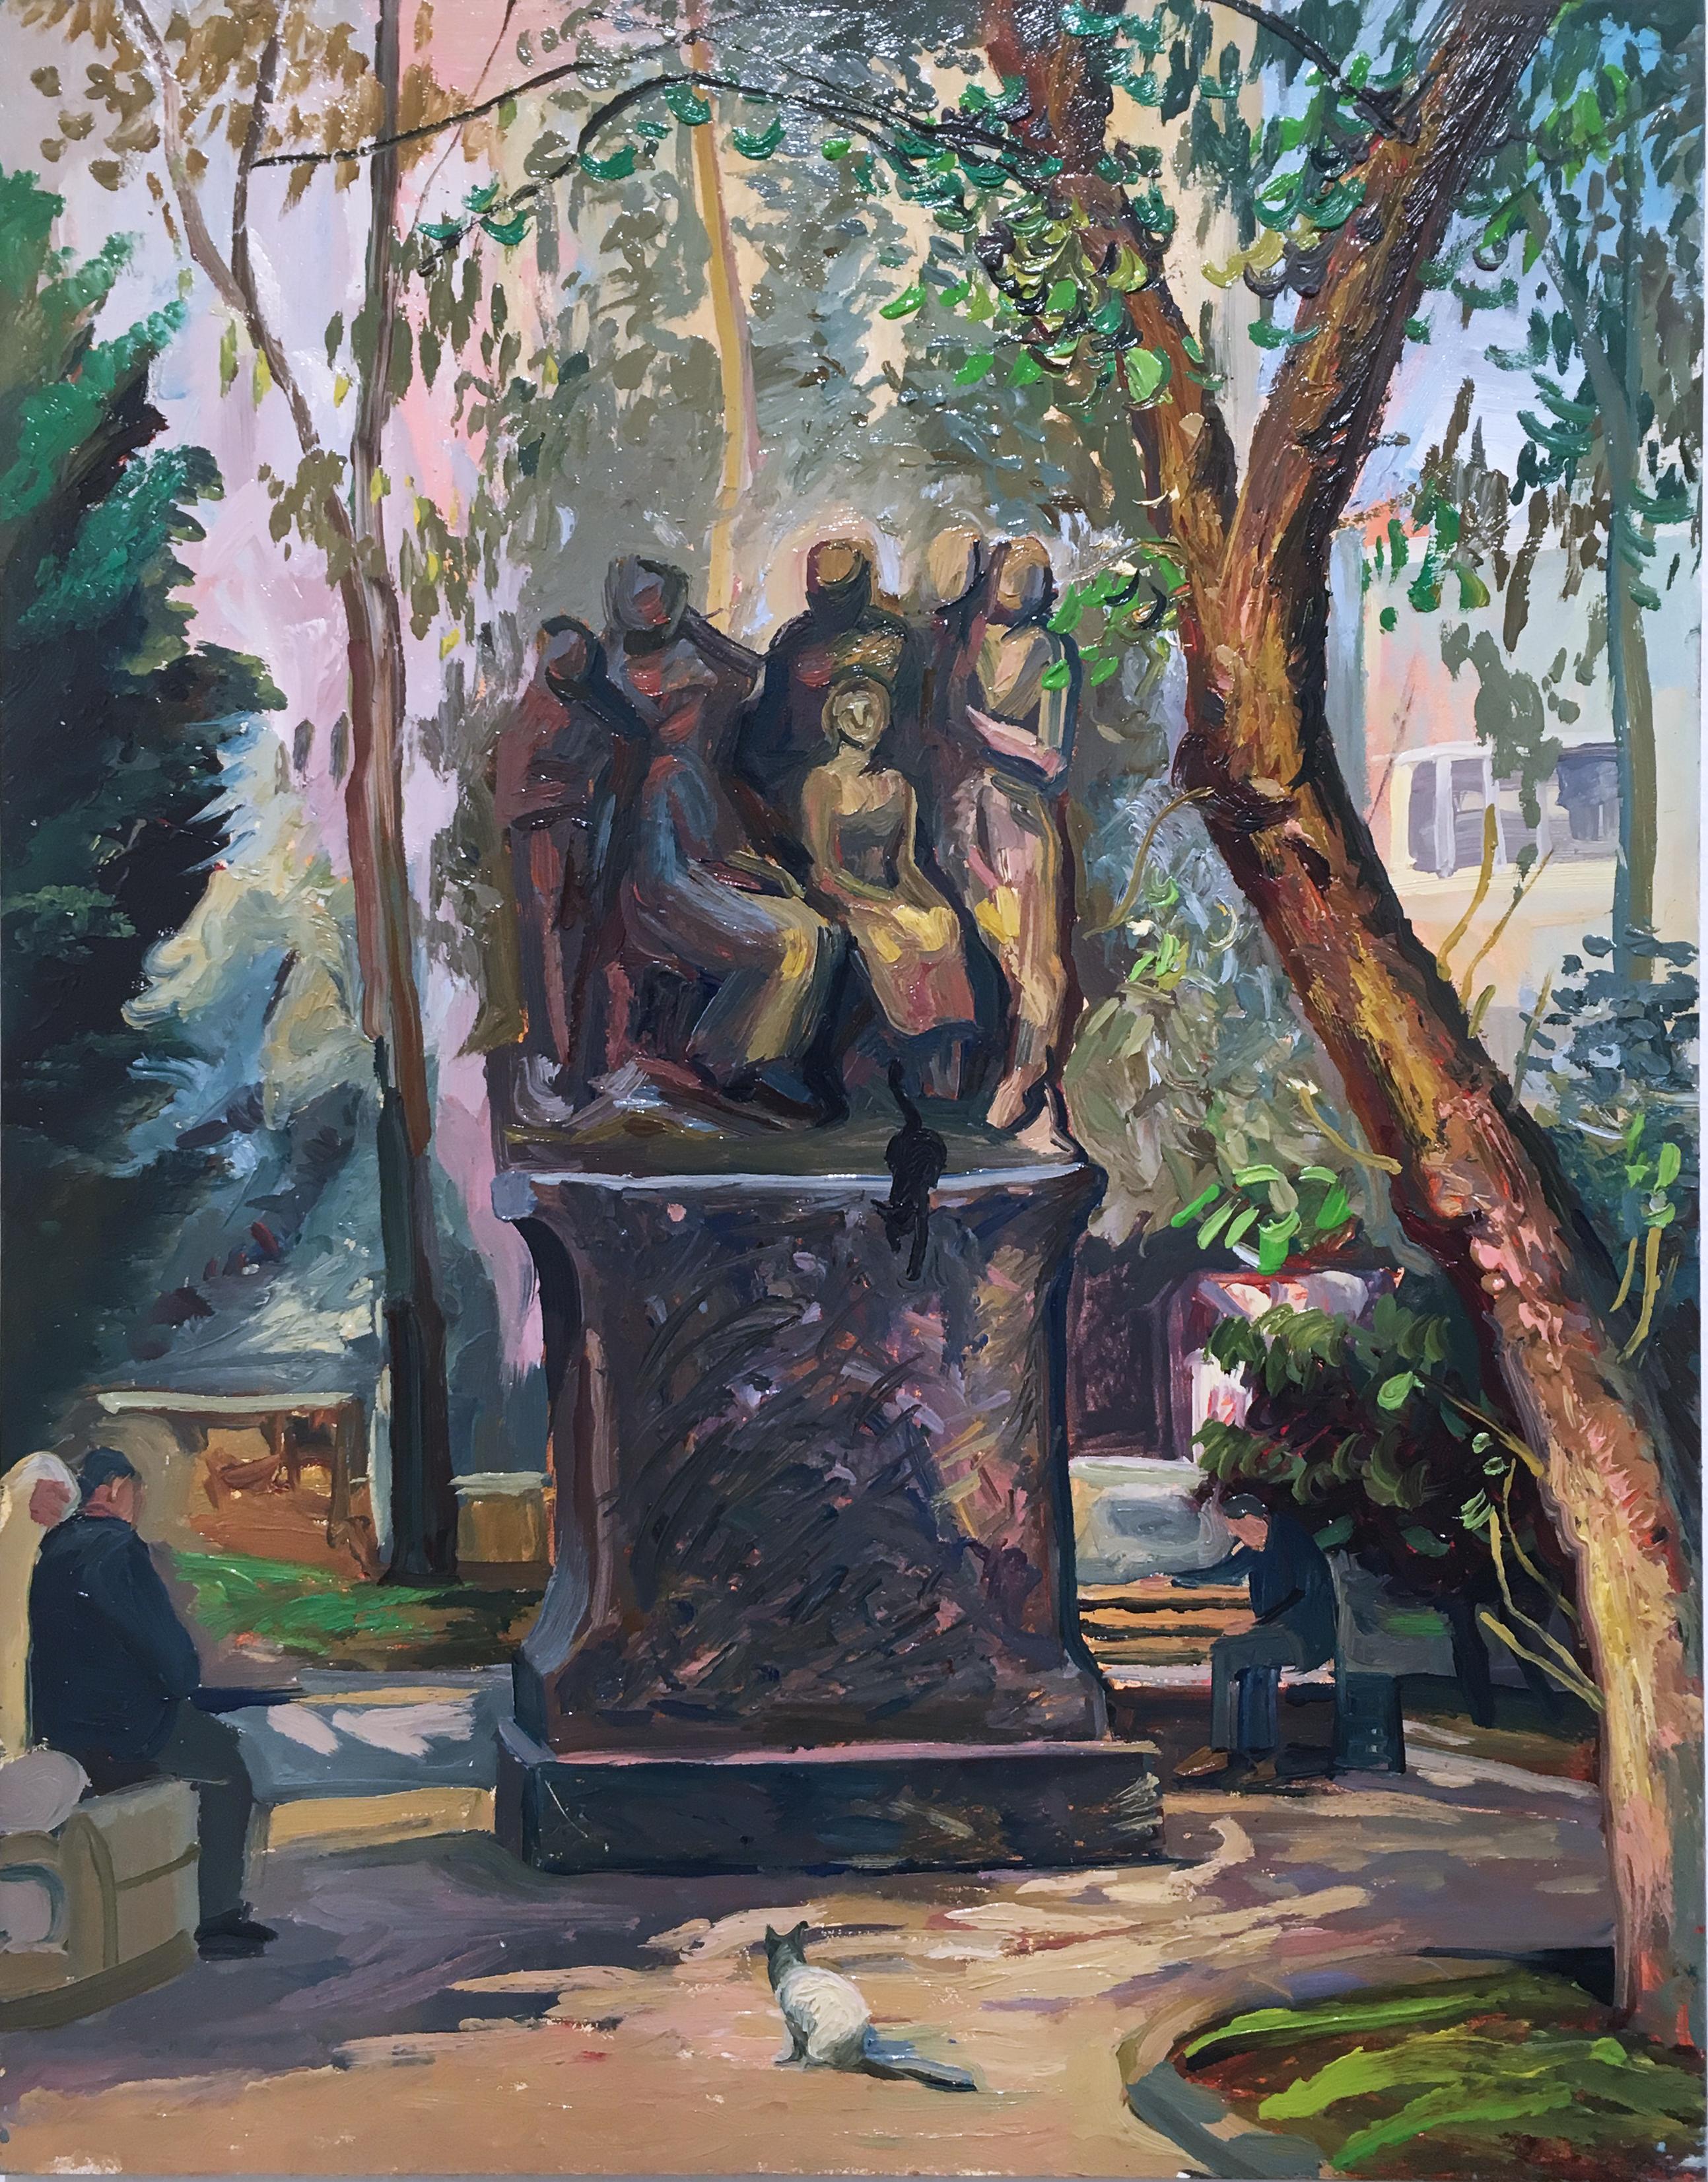 Istanbul Park, plein air figurative, landscape, oil on panel, 2014